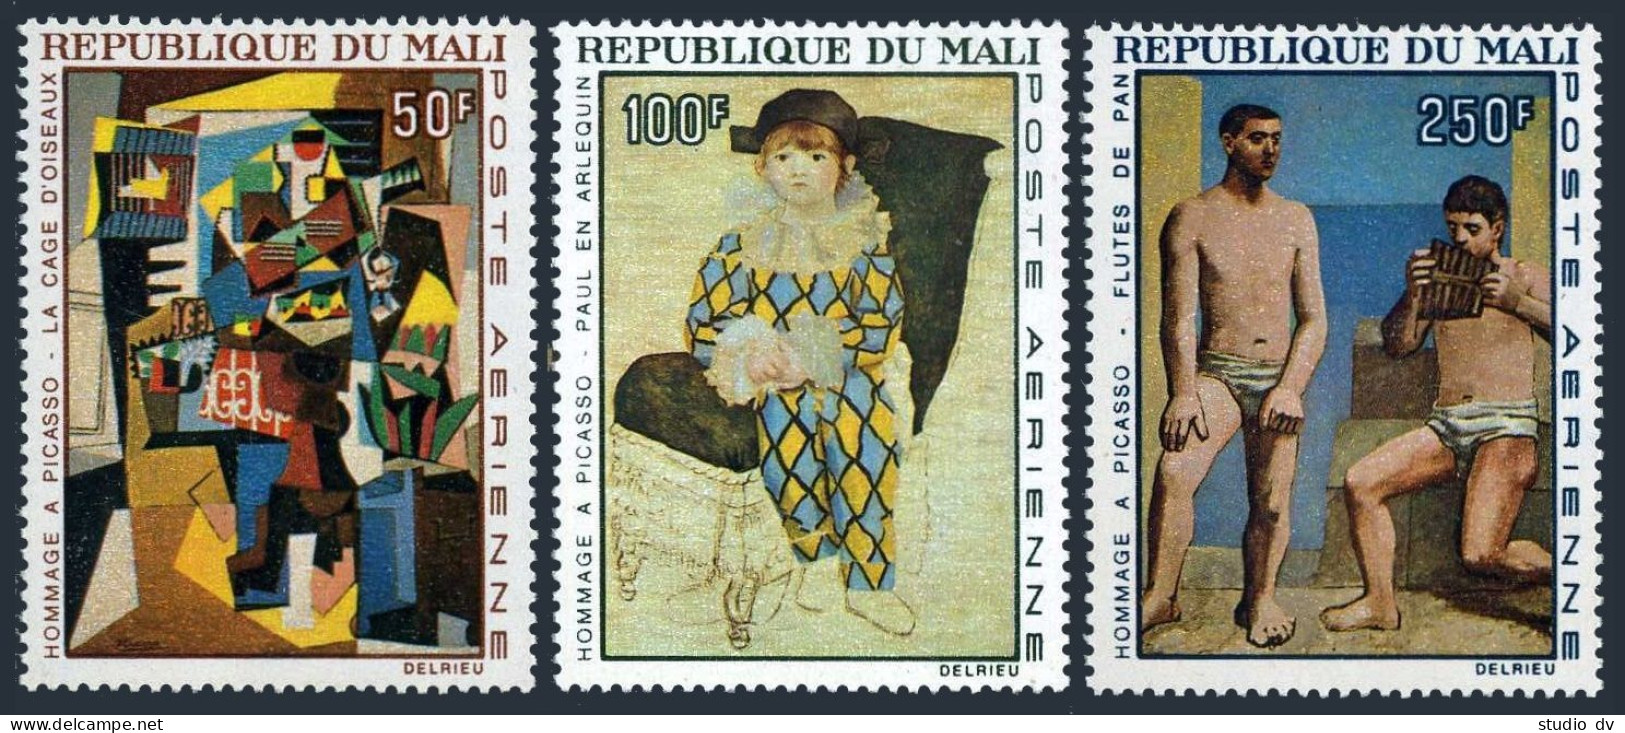 Mali C46-C48, MNH. Michel 146-148. Paintings By Picasso, 1967. - Mali (1959-...)